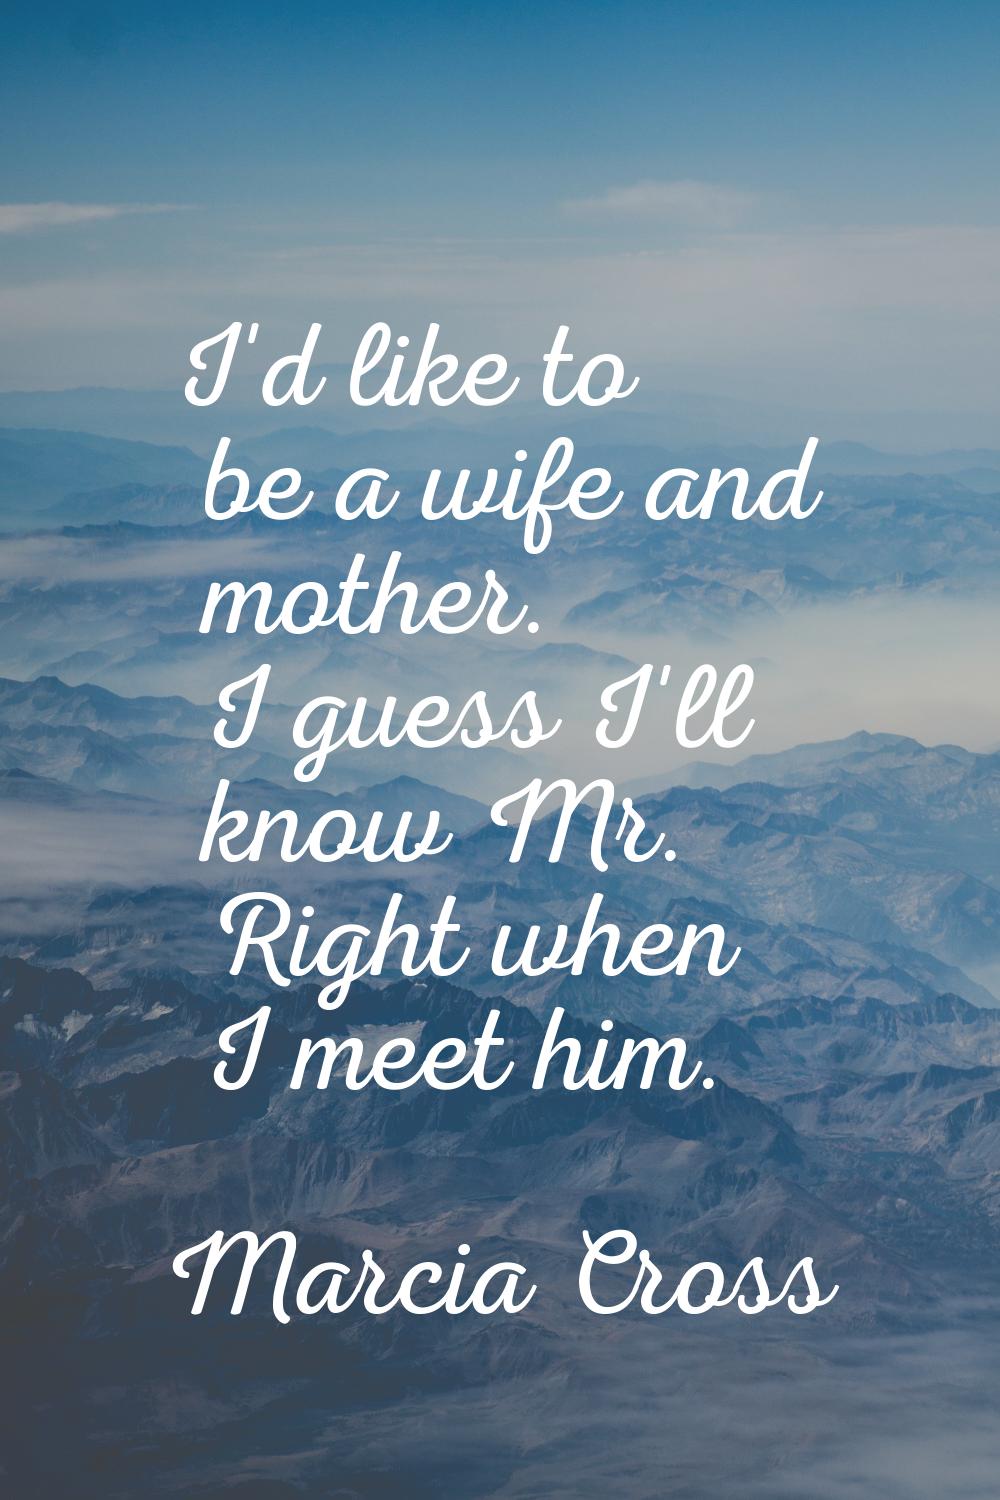 I'd like to be a wife and mother. I guess I'll know Mr. Right when I meet him.